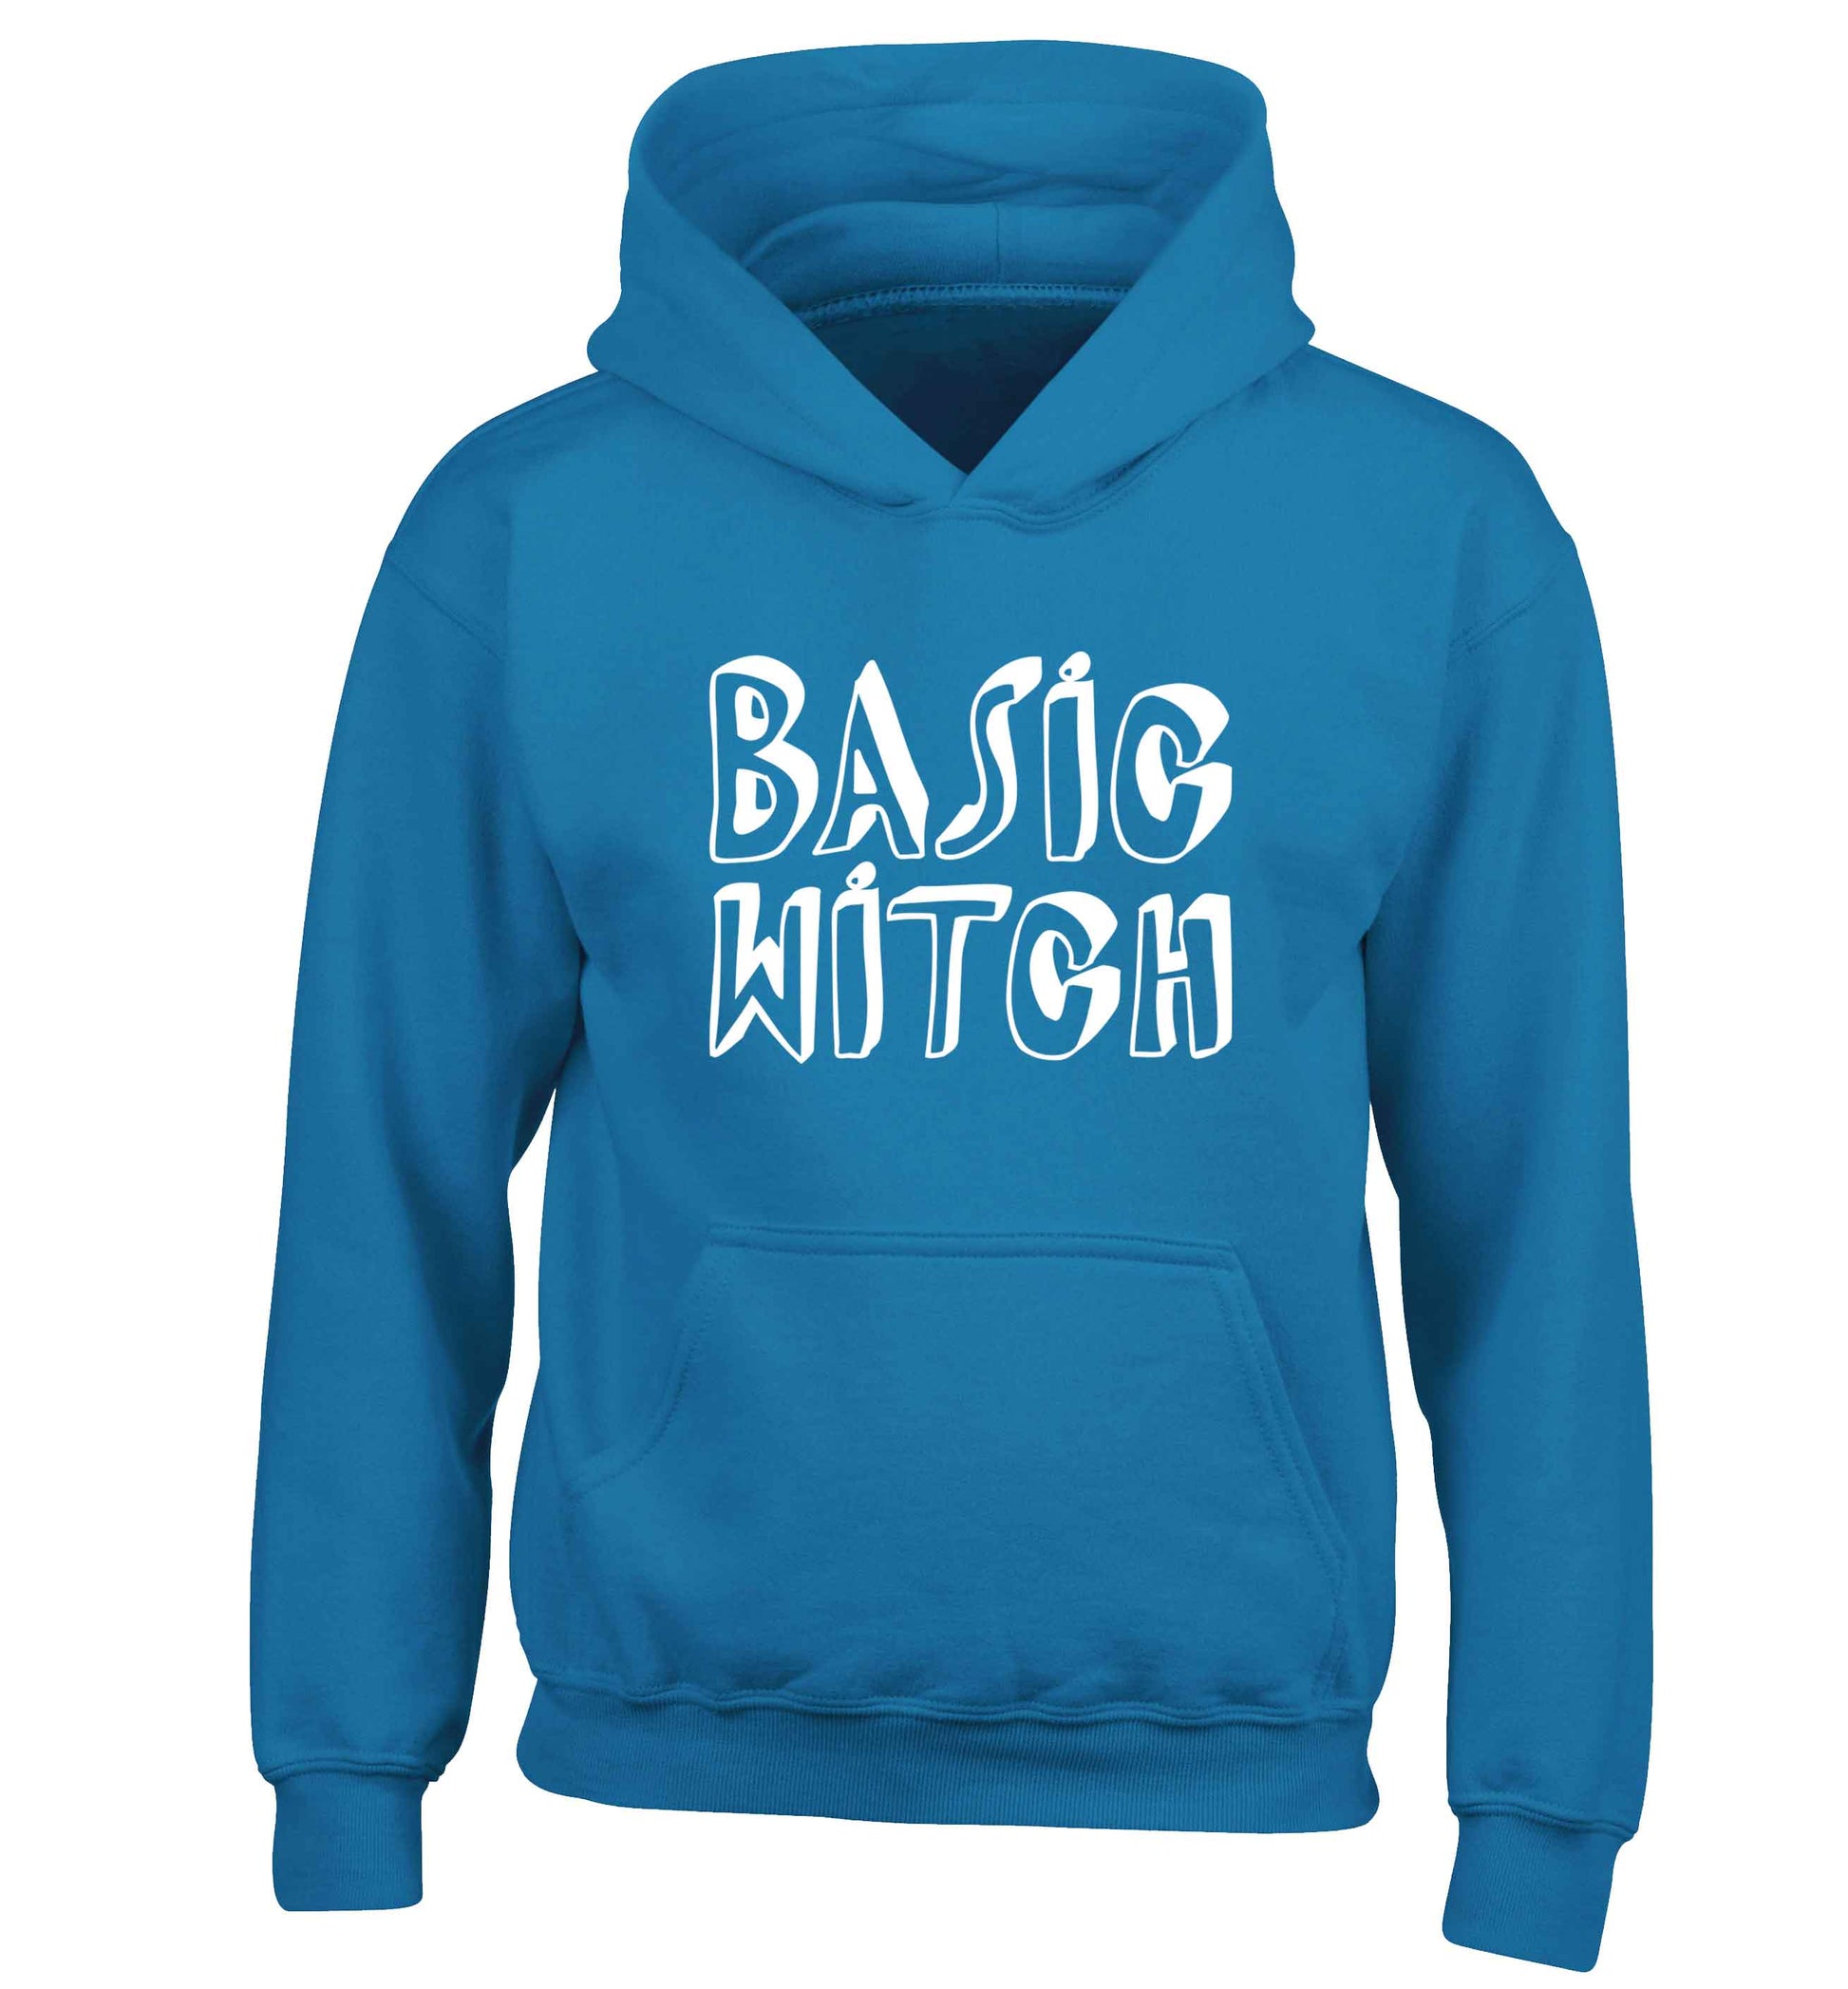 Basic witch children's blue hoodie 12-13 Years